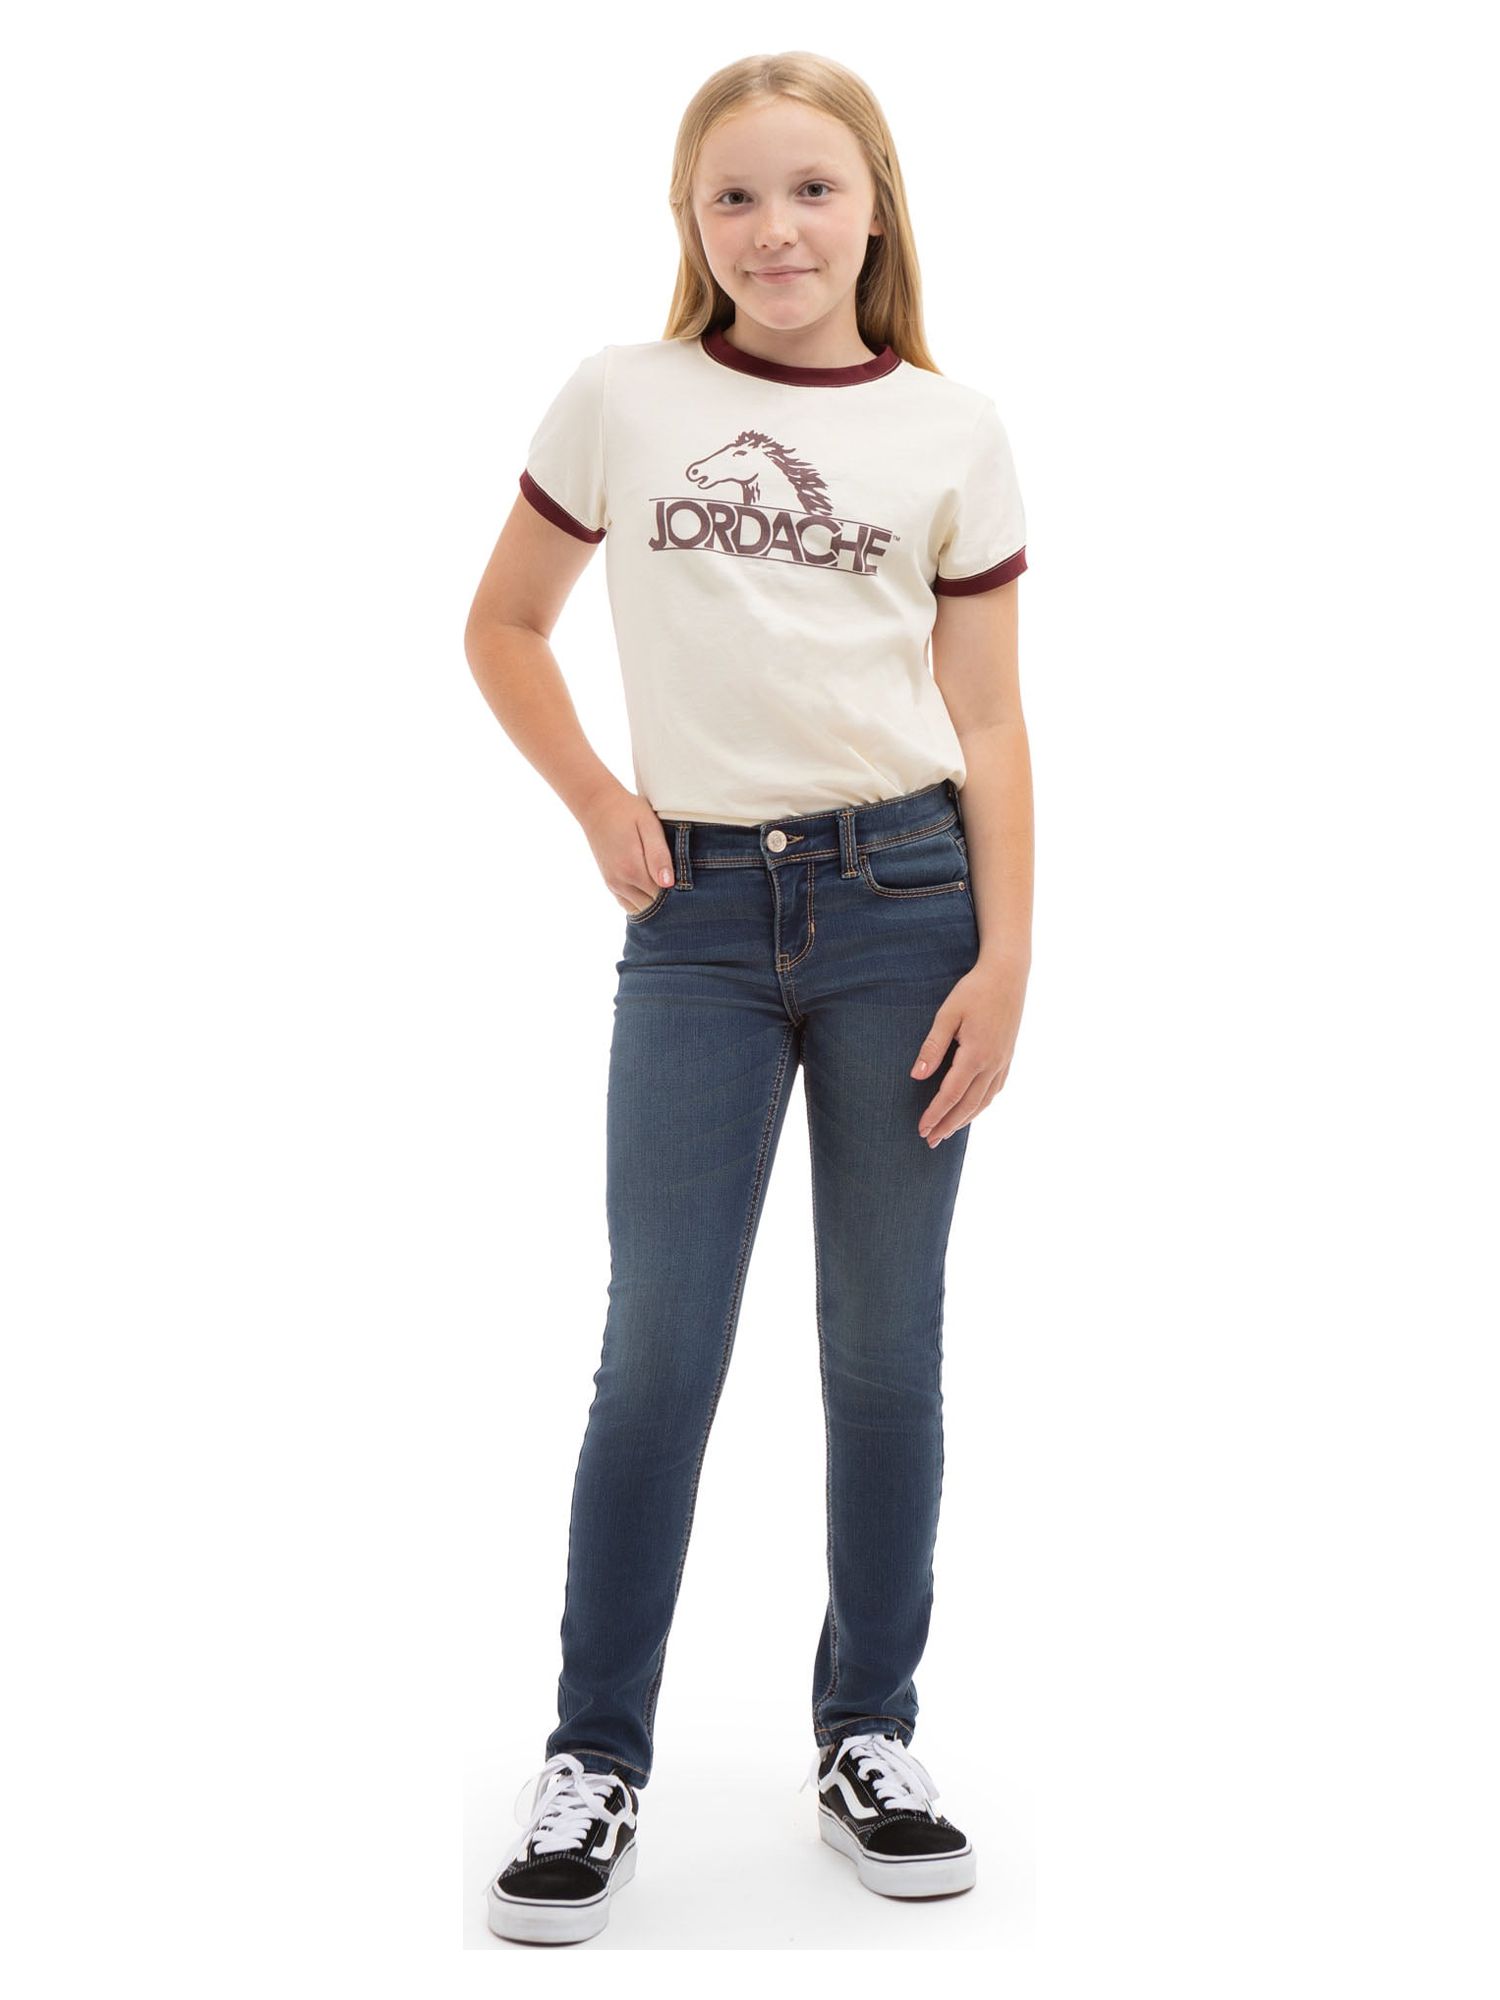 Jordache Girls Skinny Jeans, Sizes 5-18 - image 2 of 5